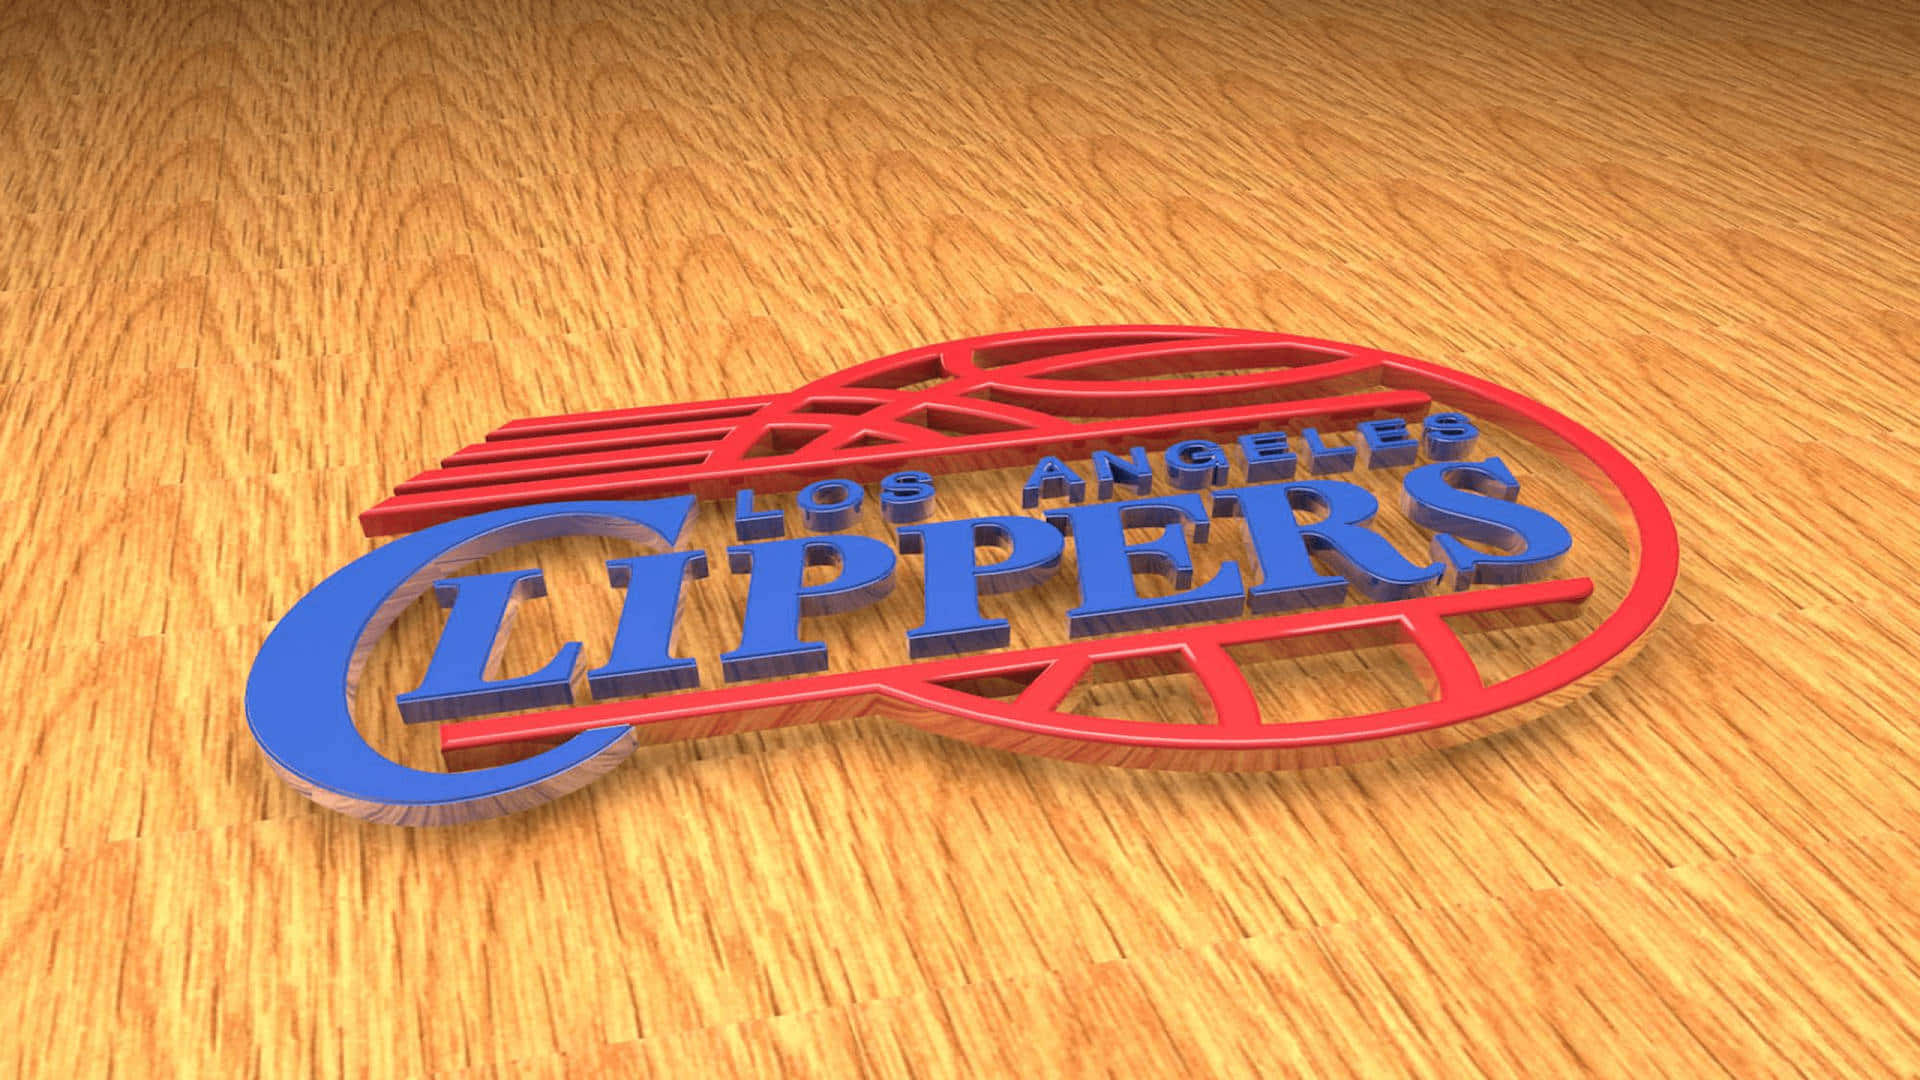 Equipode Baloncesto La Clippers Arte Digital En 3d Fondo de pantalla